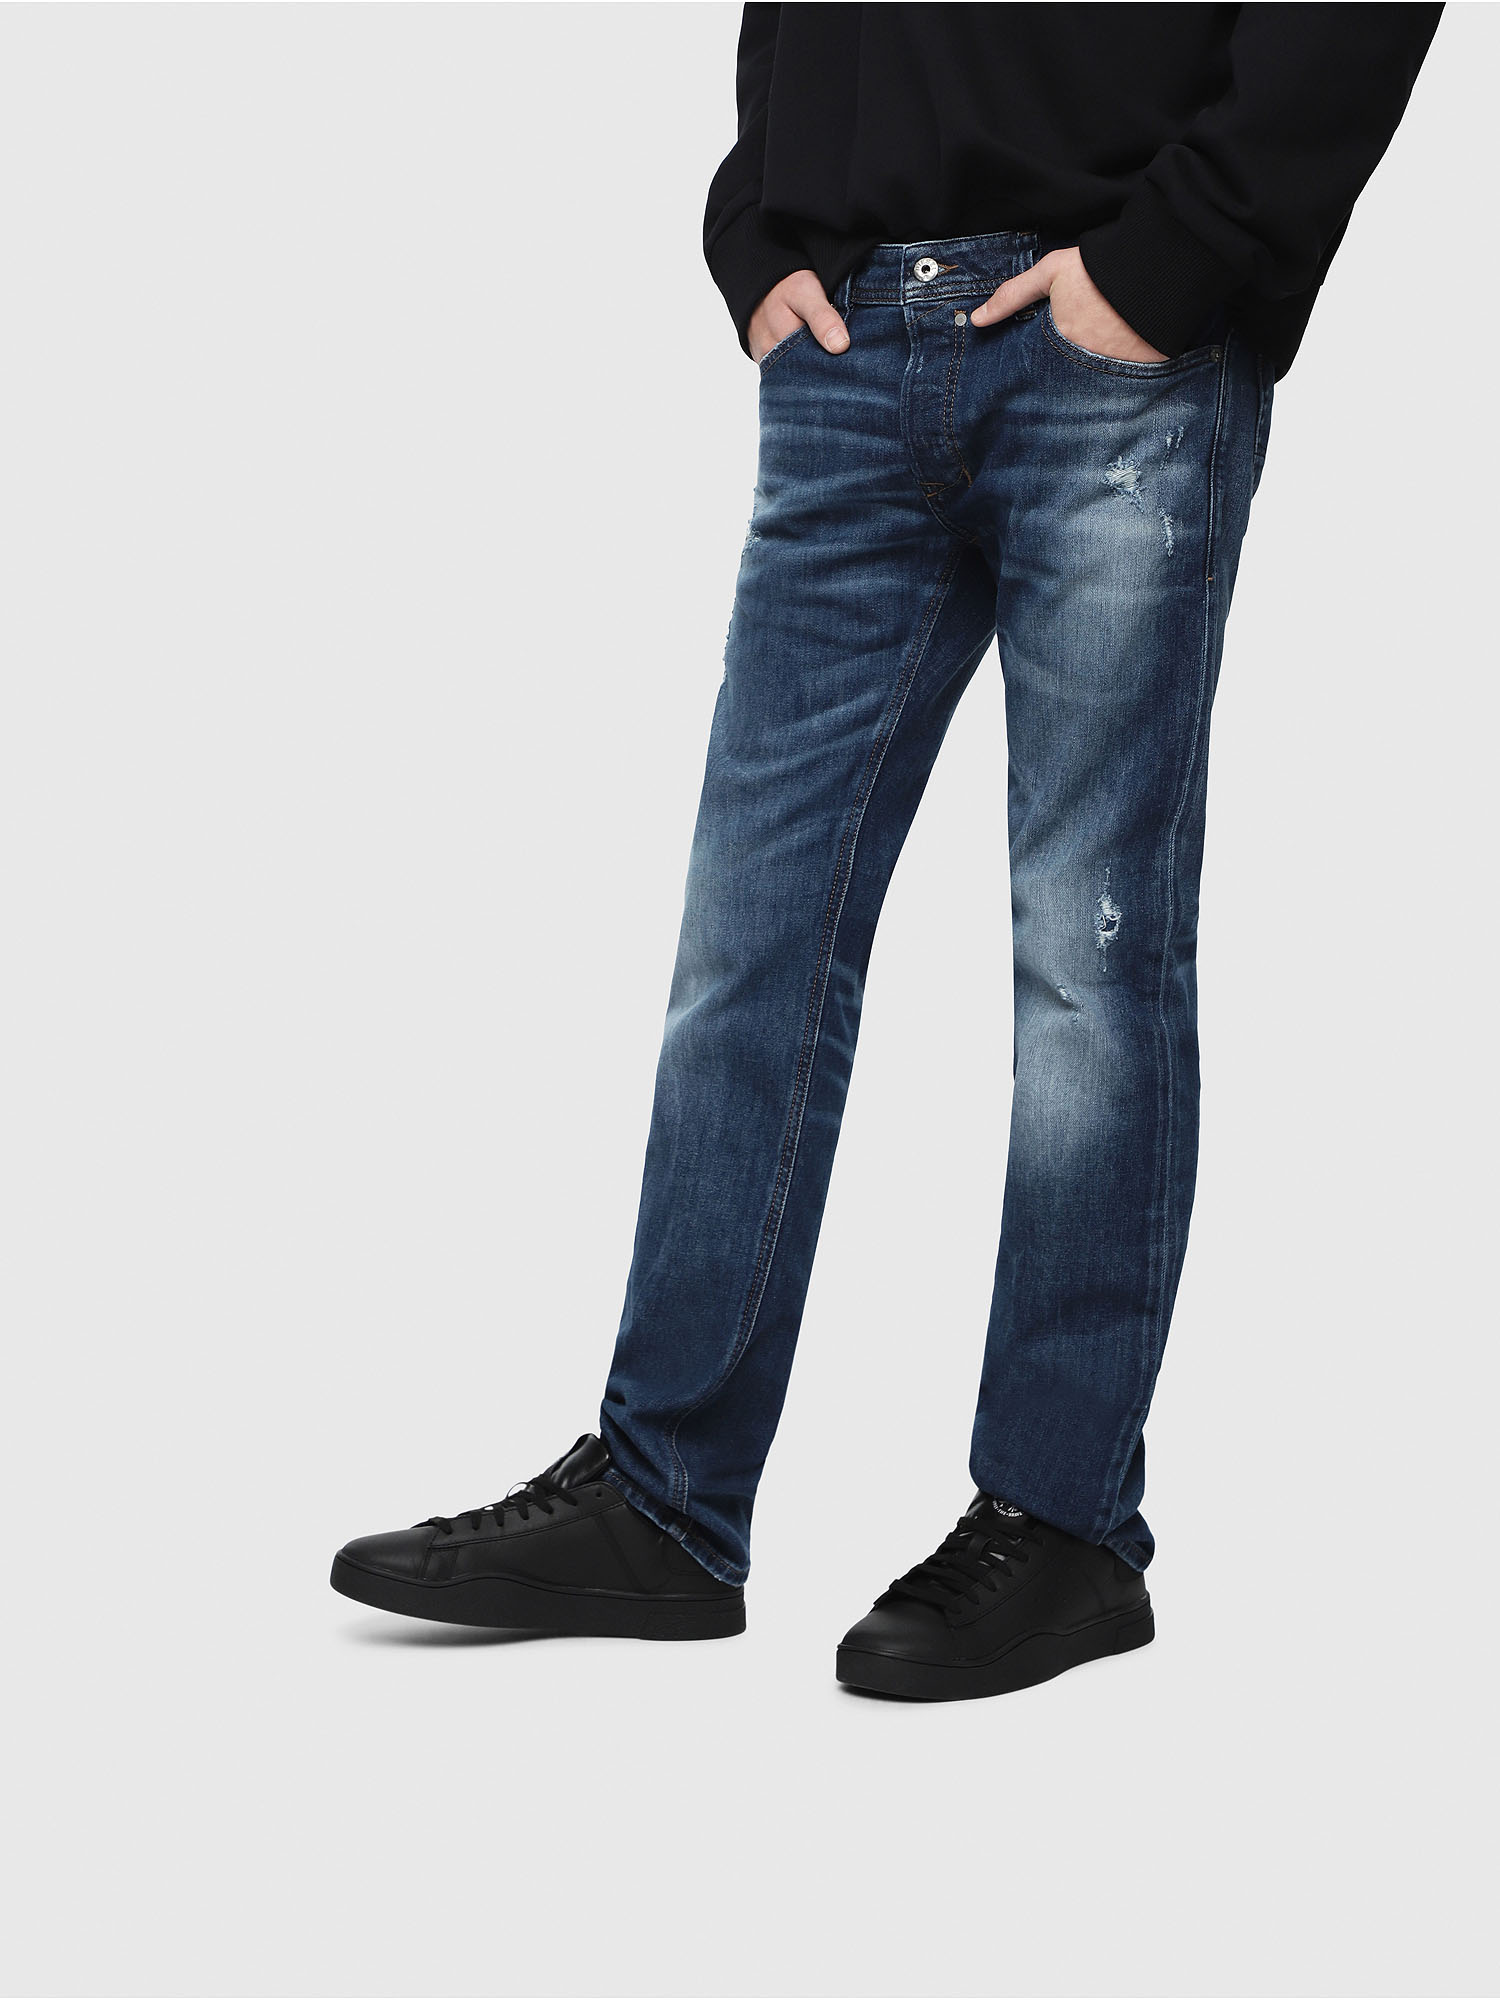 passion trial Conceit Diesel Safado Man Straight Jeans | Diesel.com